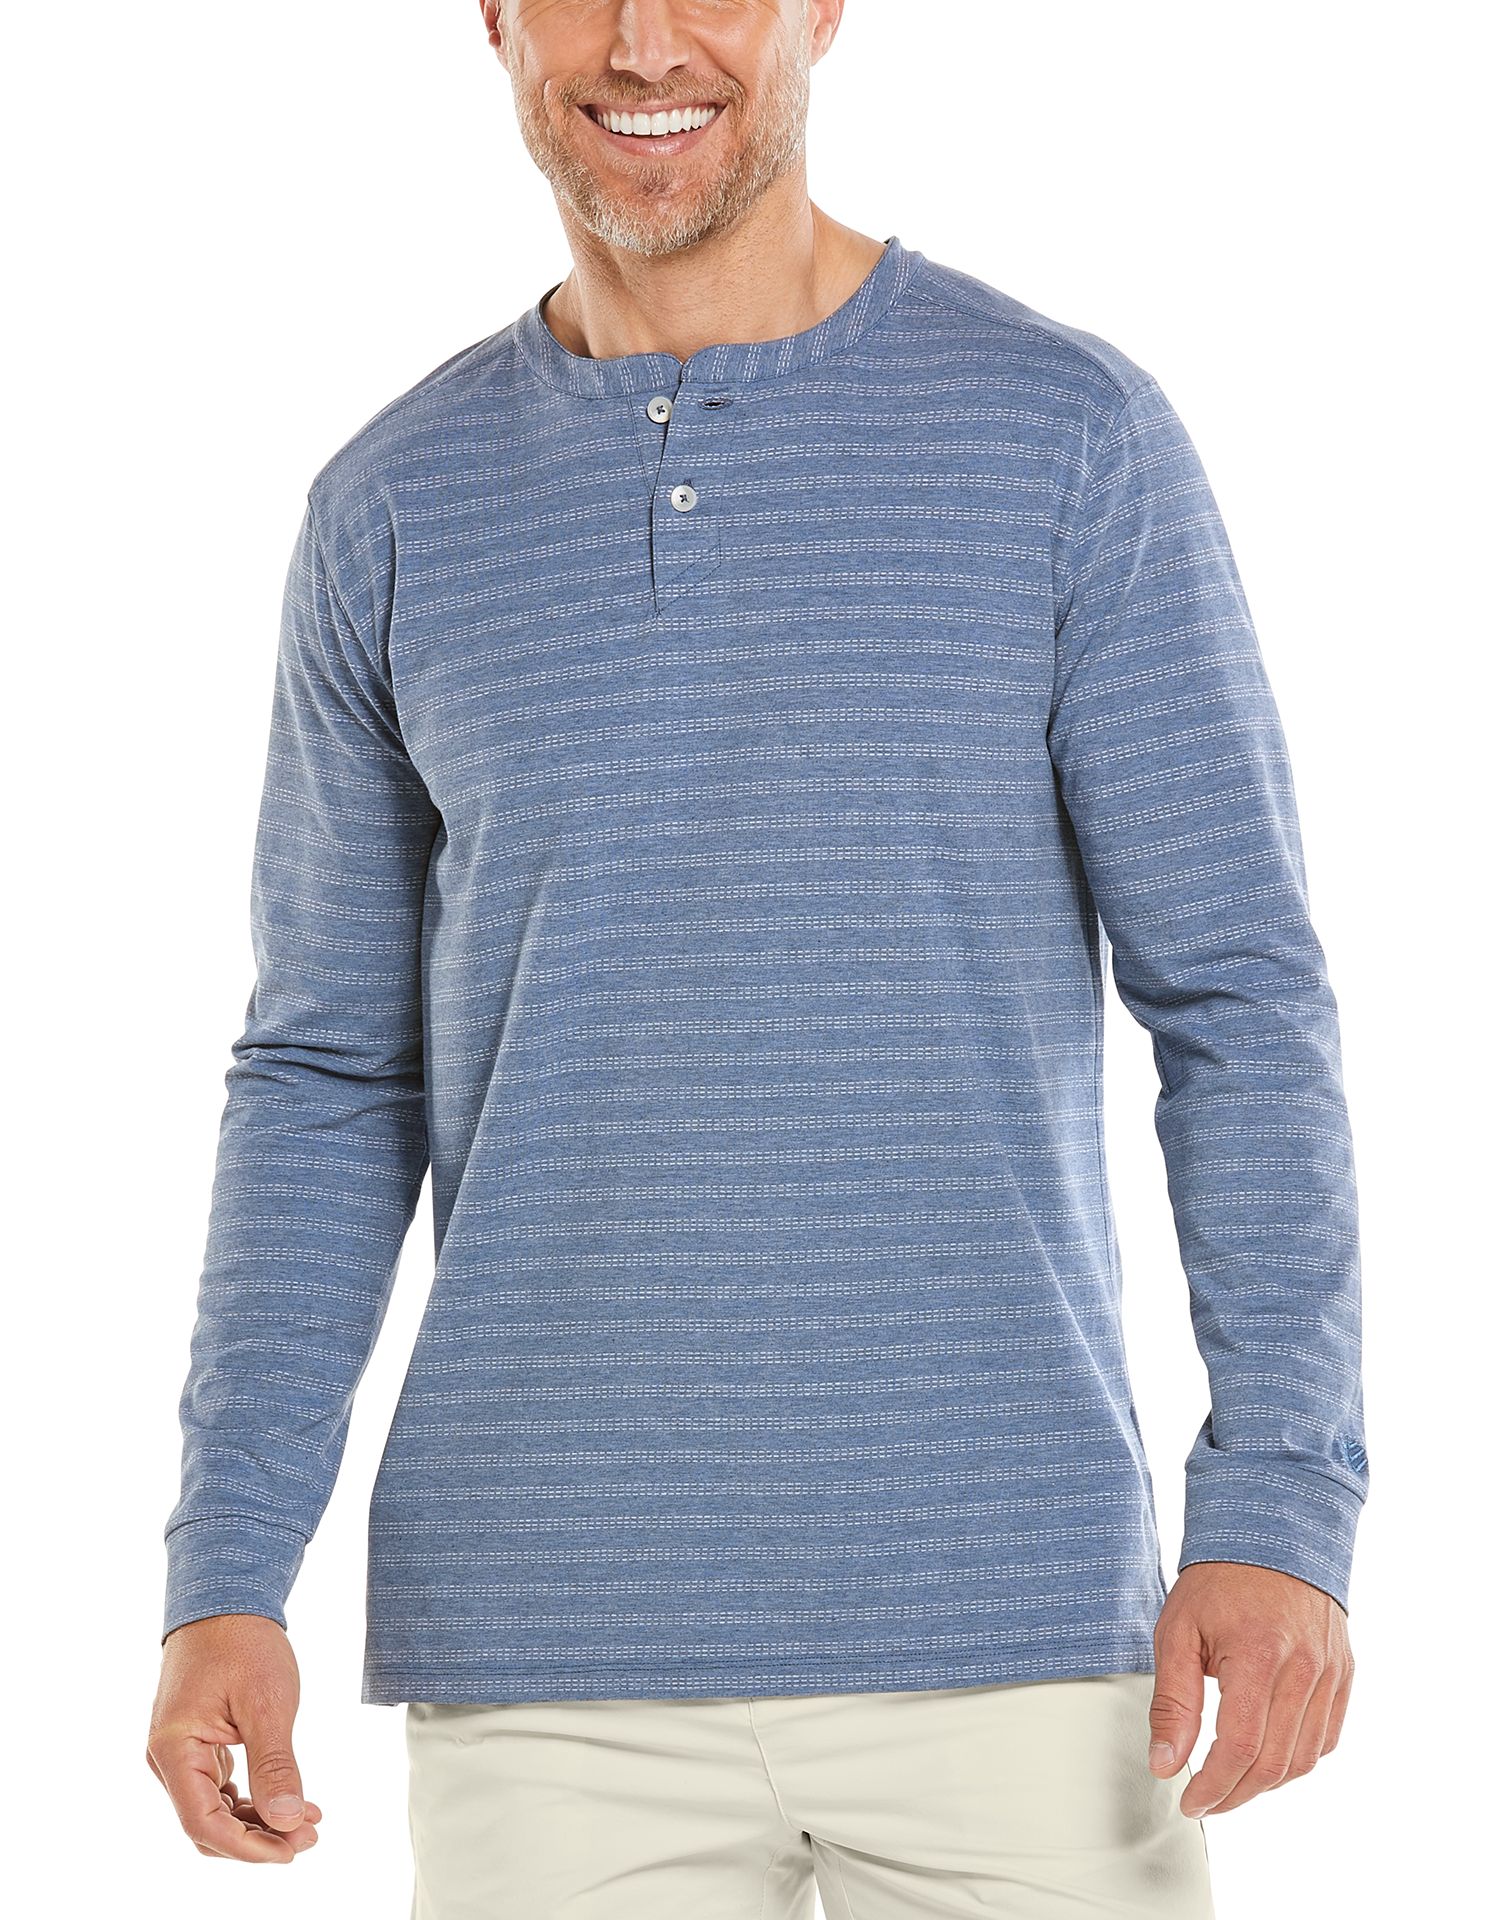 Coolibar - UV Shirt für Herren - Langärmlig - Mojave Henley - Pazifikblau